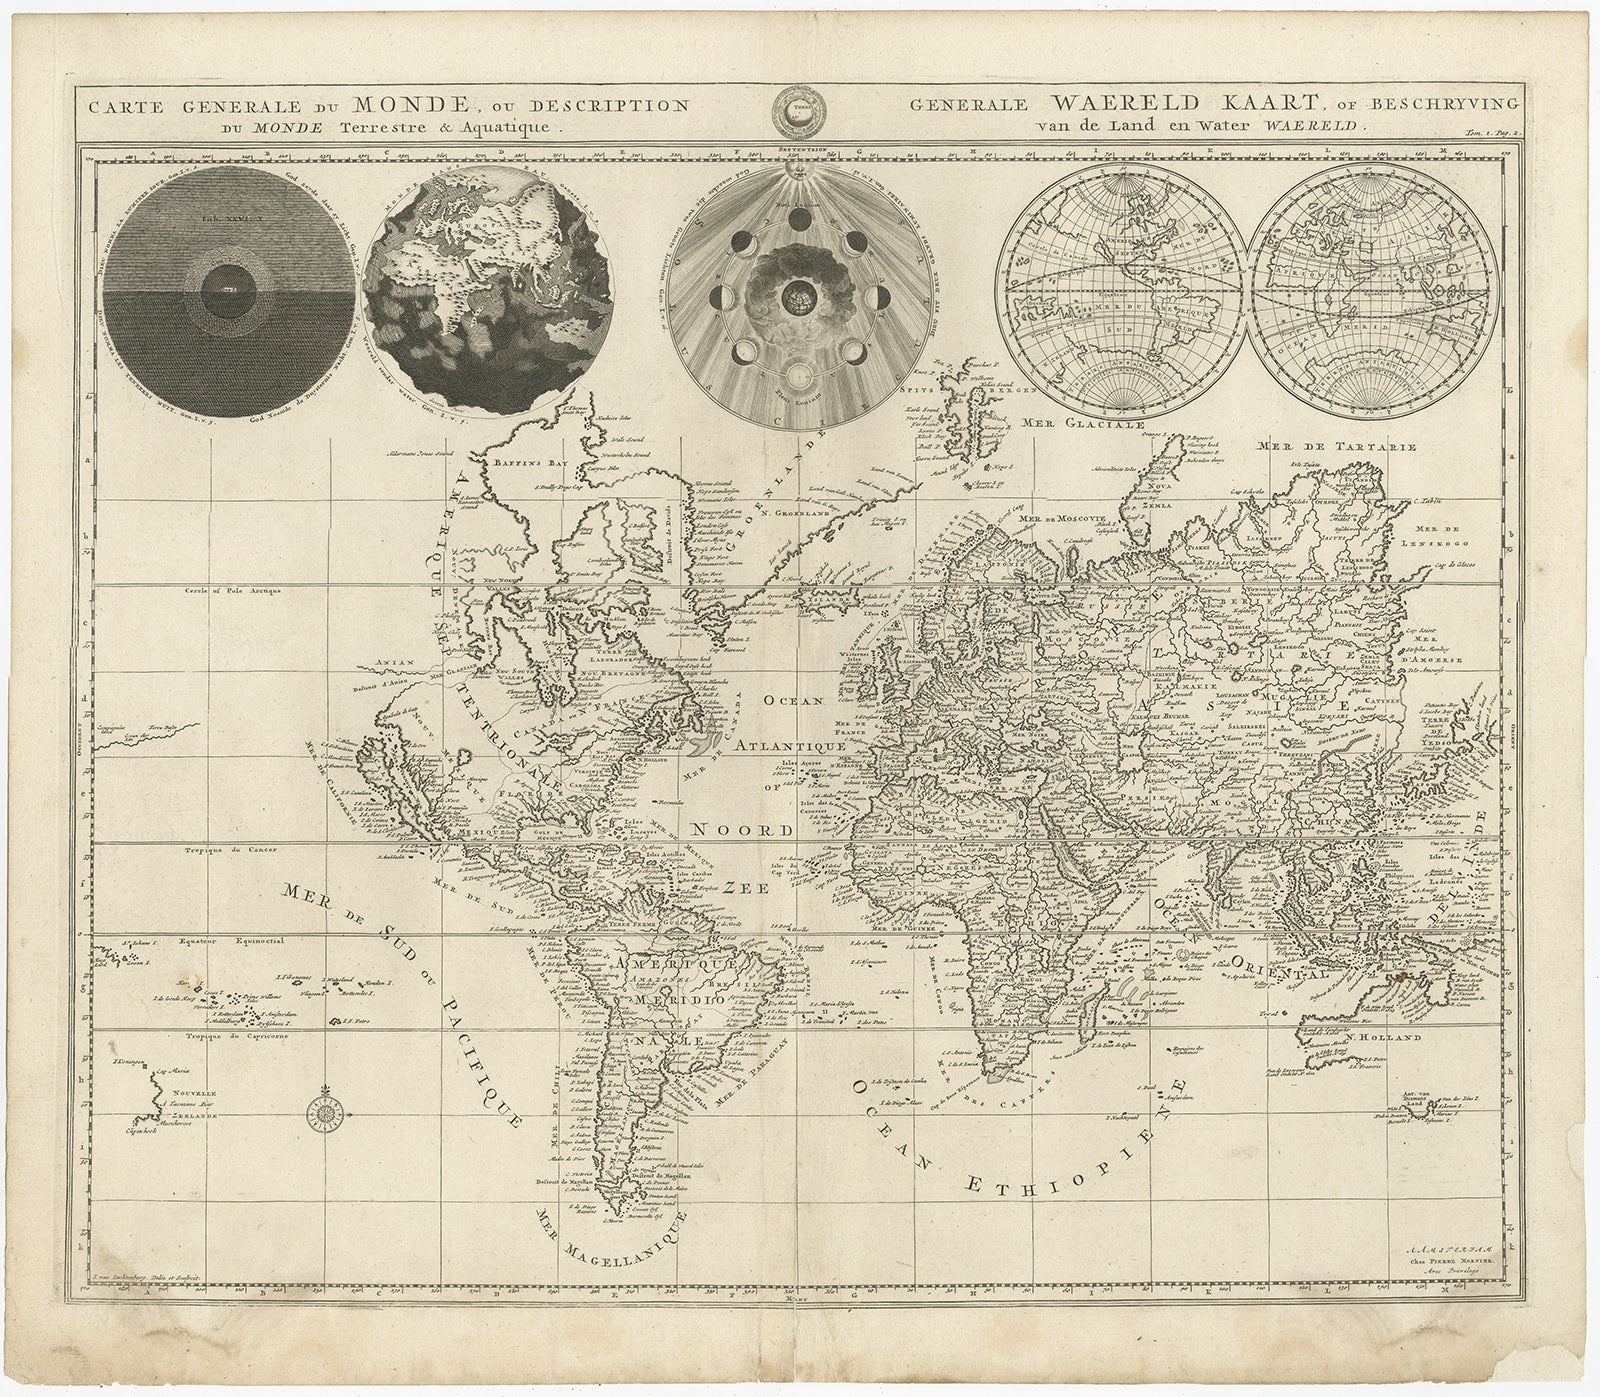 Antique world map titled 'Carte generale du monde, ou description du monde terrestre & Aquatique - Generale Waereld kaart, of beschryving van de land en water waereld'. This is Pierre Mortier's world map drawn on Mercator's projection. It depicts